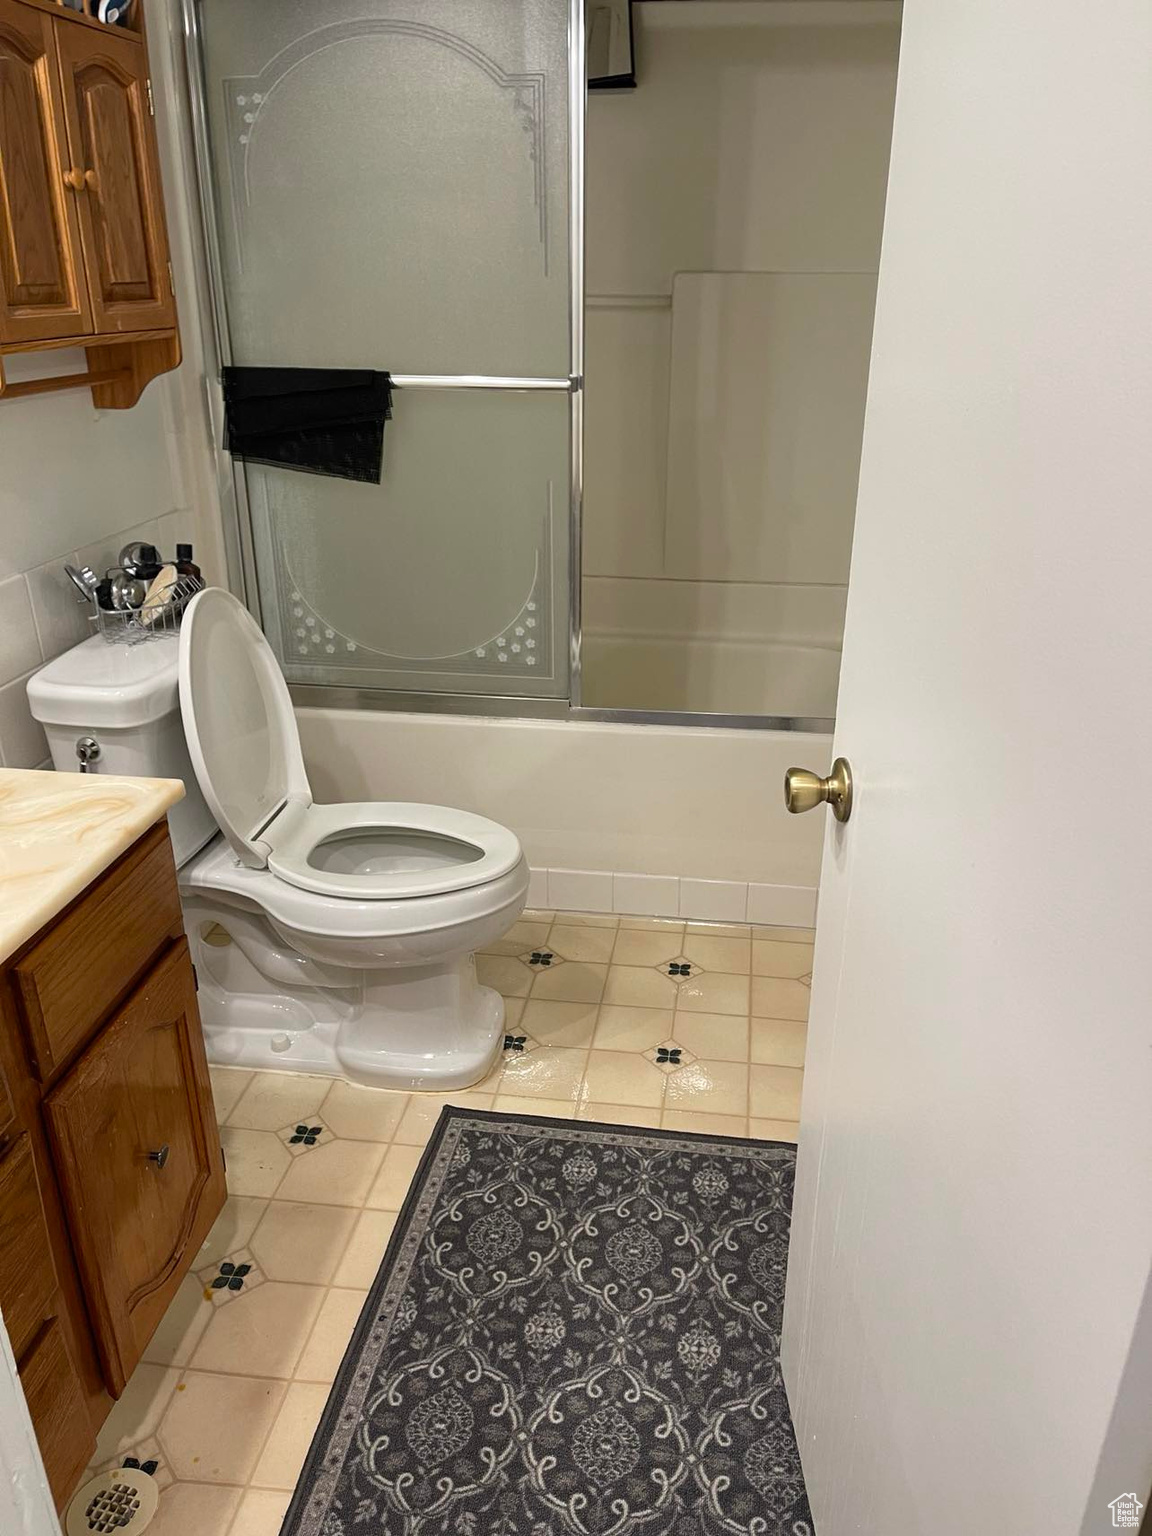 Full bathroom with vanity, tile floors, toilet, and bath / shower combo with glass door